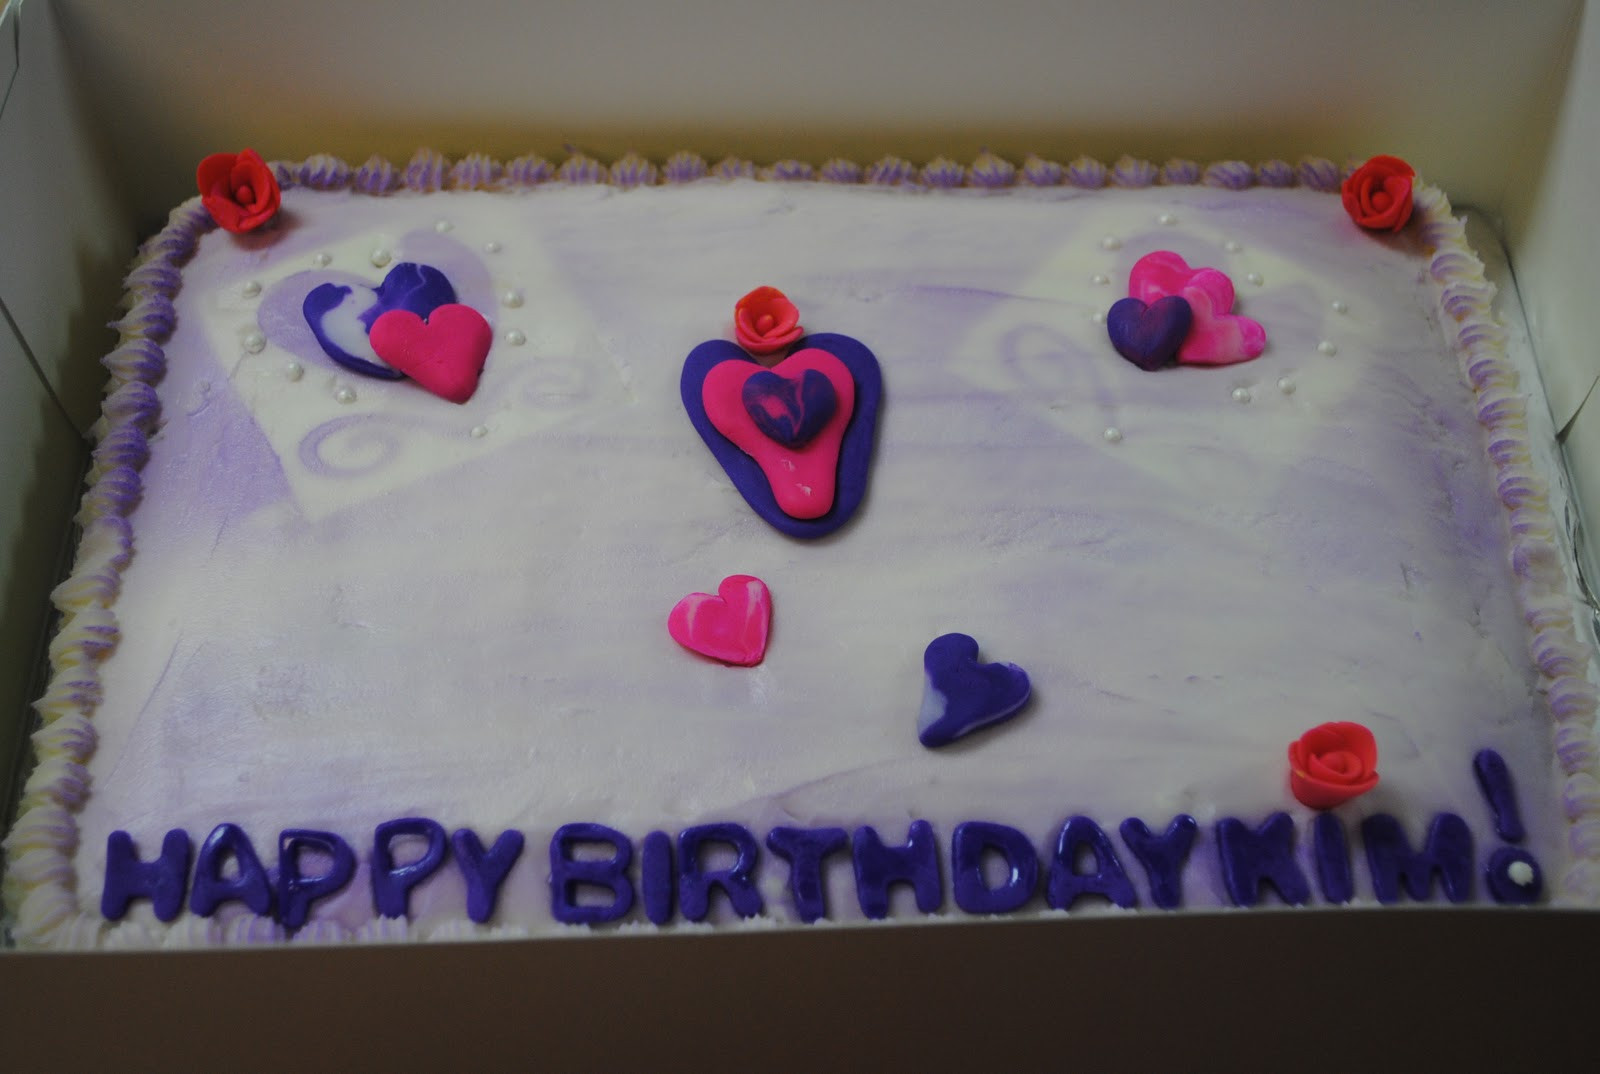 Best ideas about Happy Birthday Kim Cake
. Save or Pin Cakes By Liz Poston The Happy Birthday Kim Cake Now.